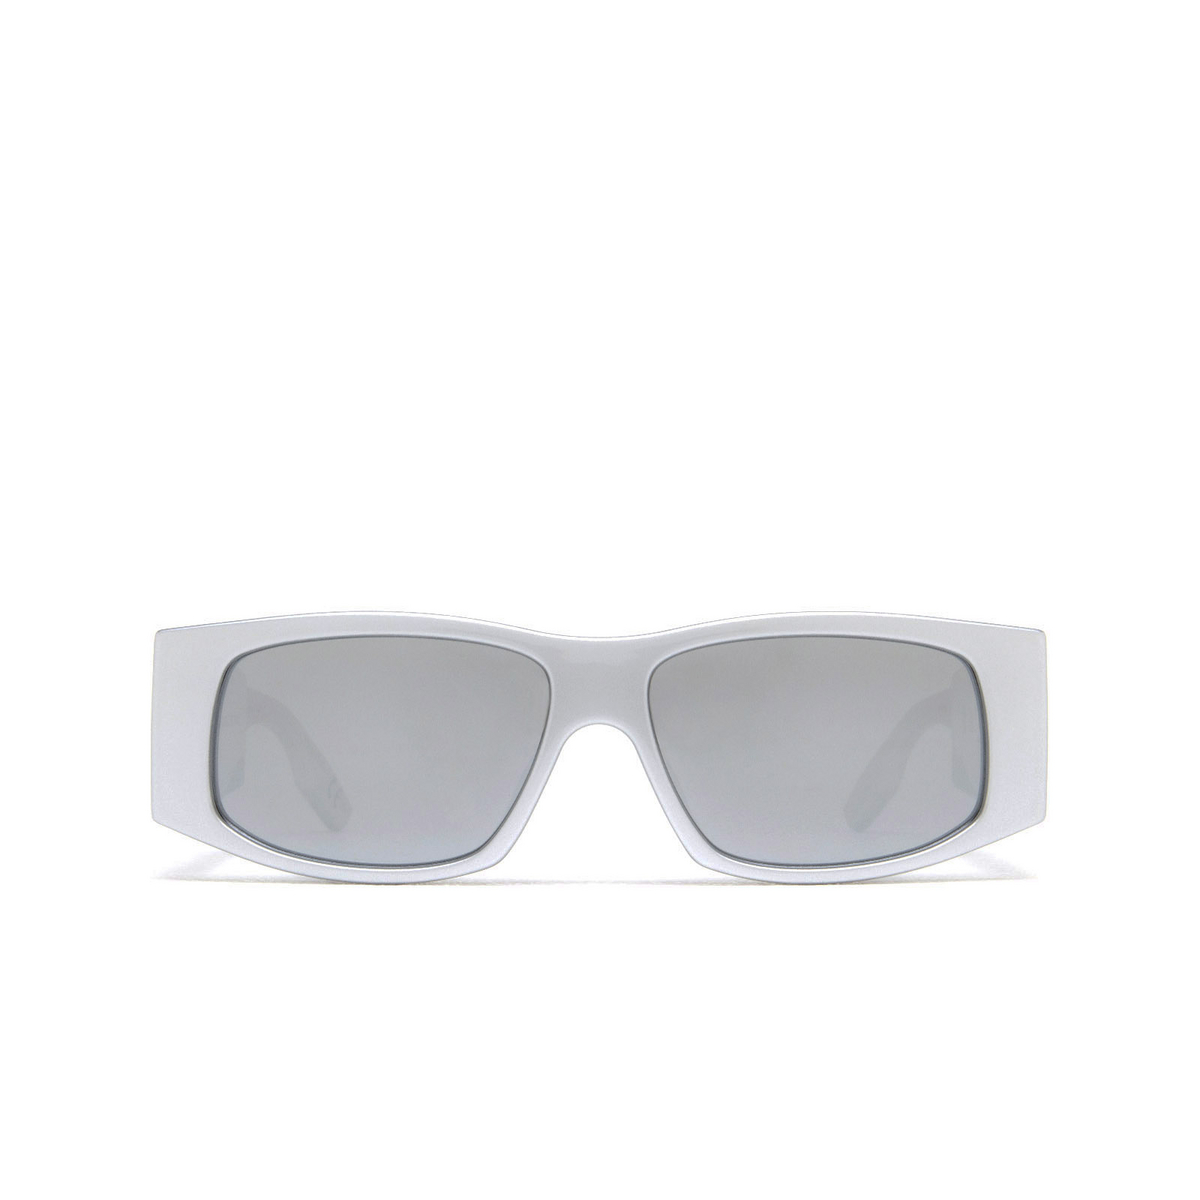 Balenciaga LED Frame Sunglasses 002 Silver - front view